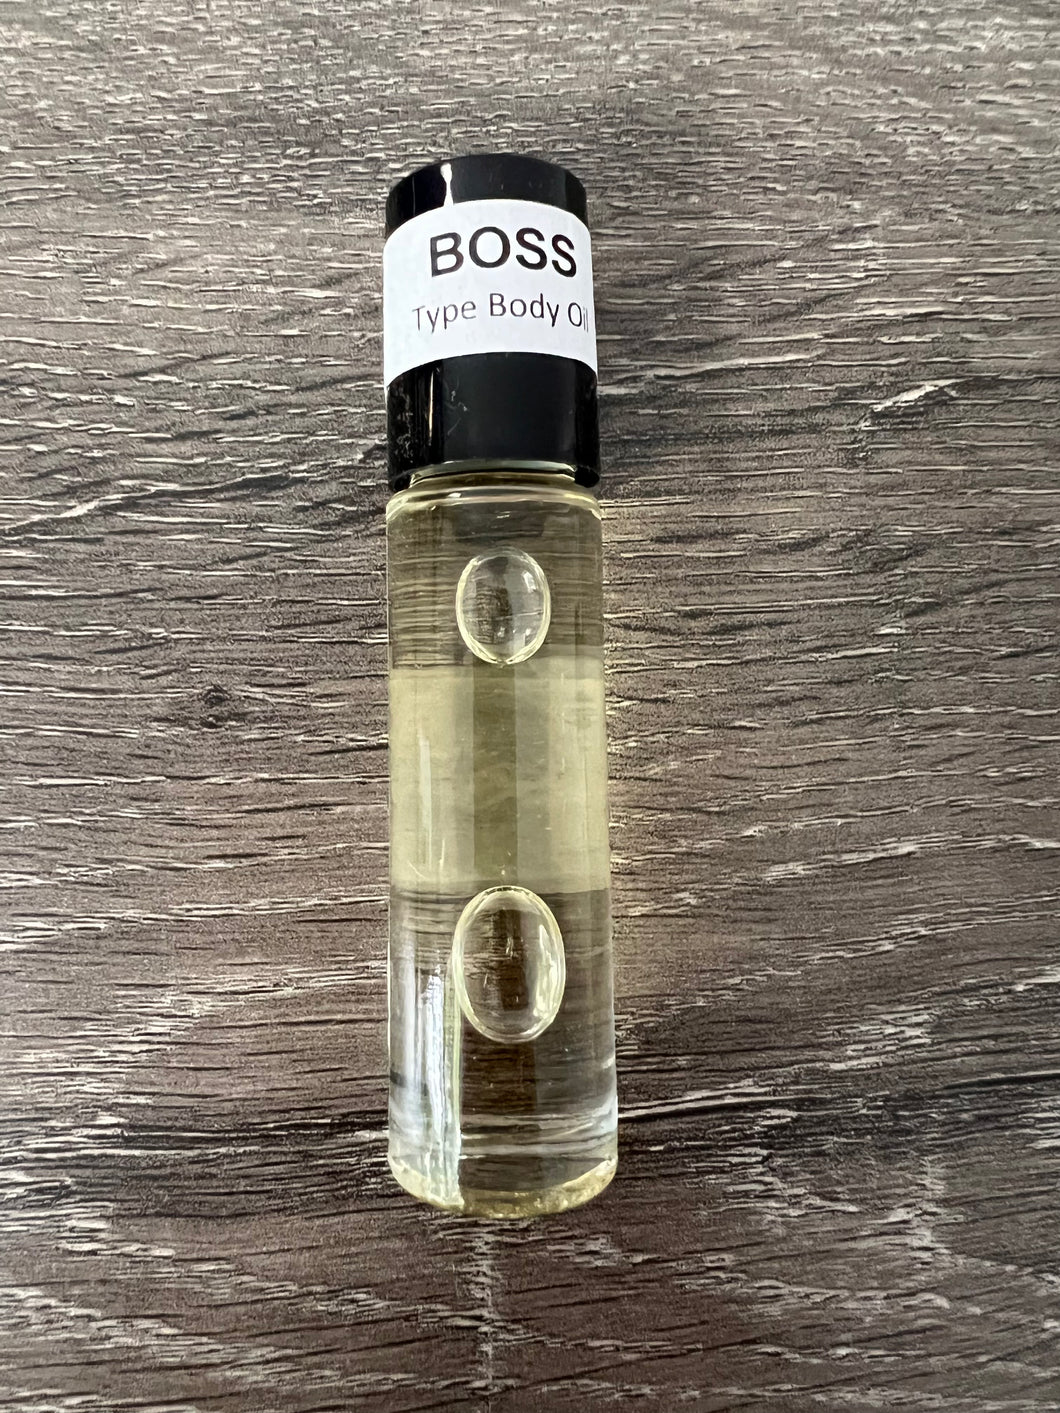 Boss Body Oil